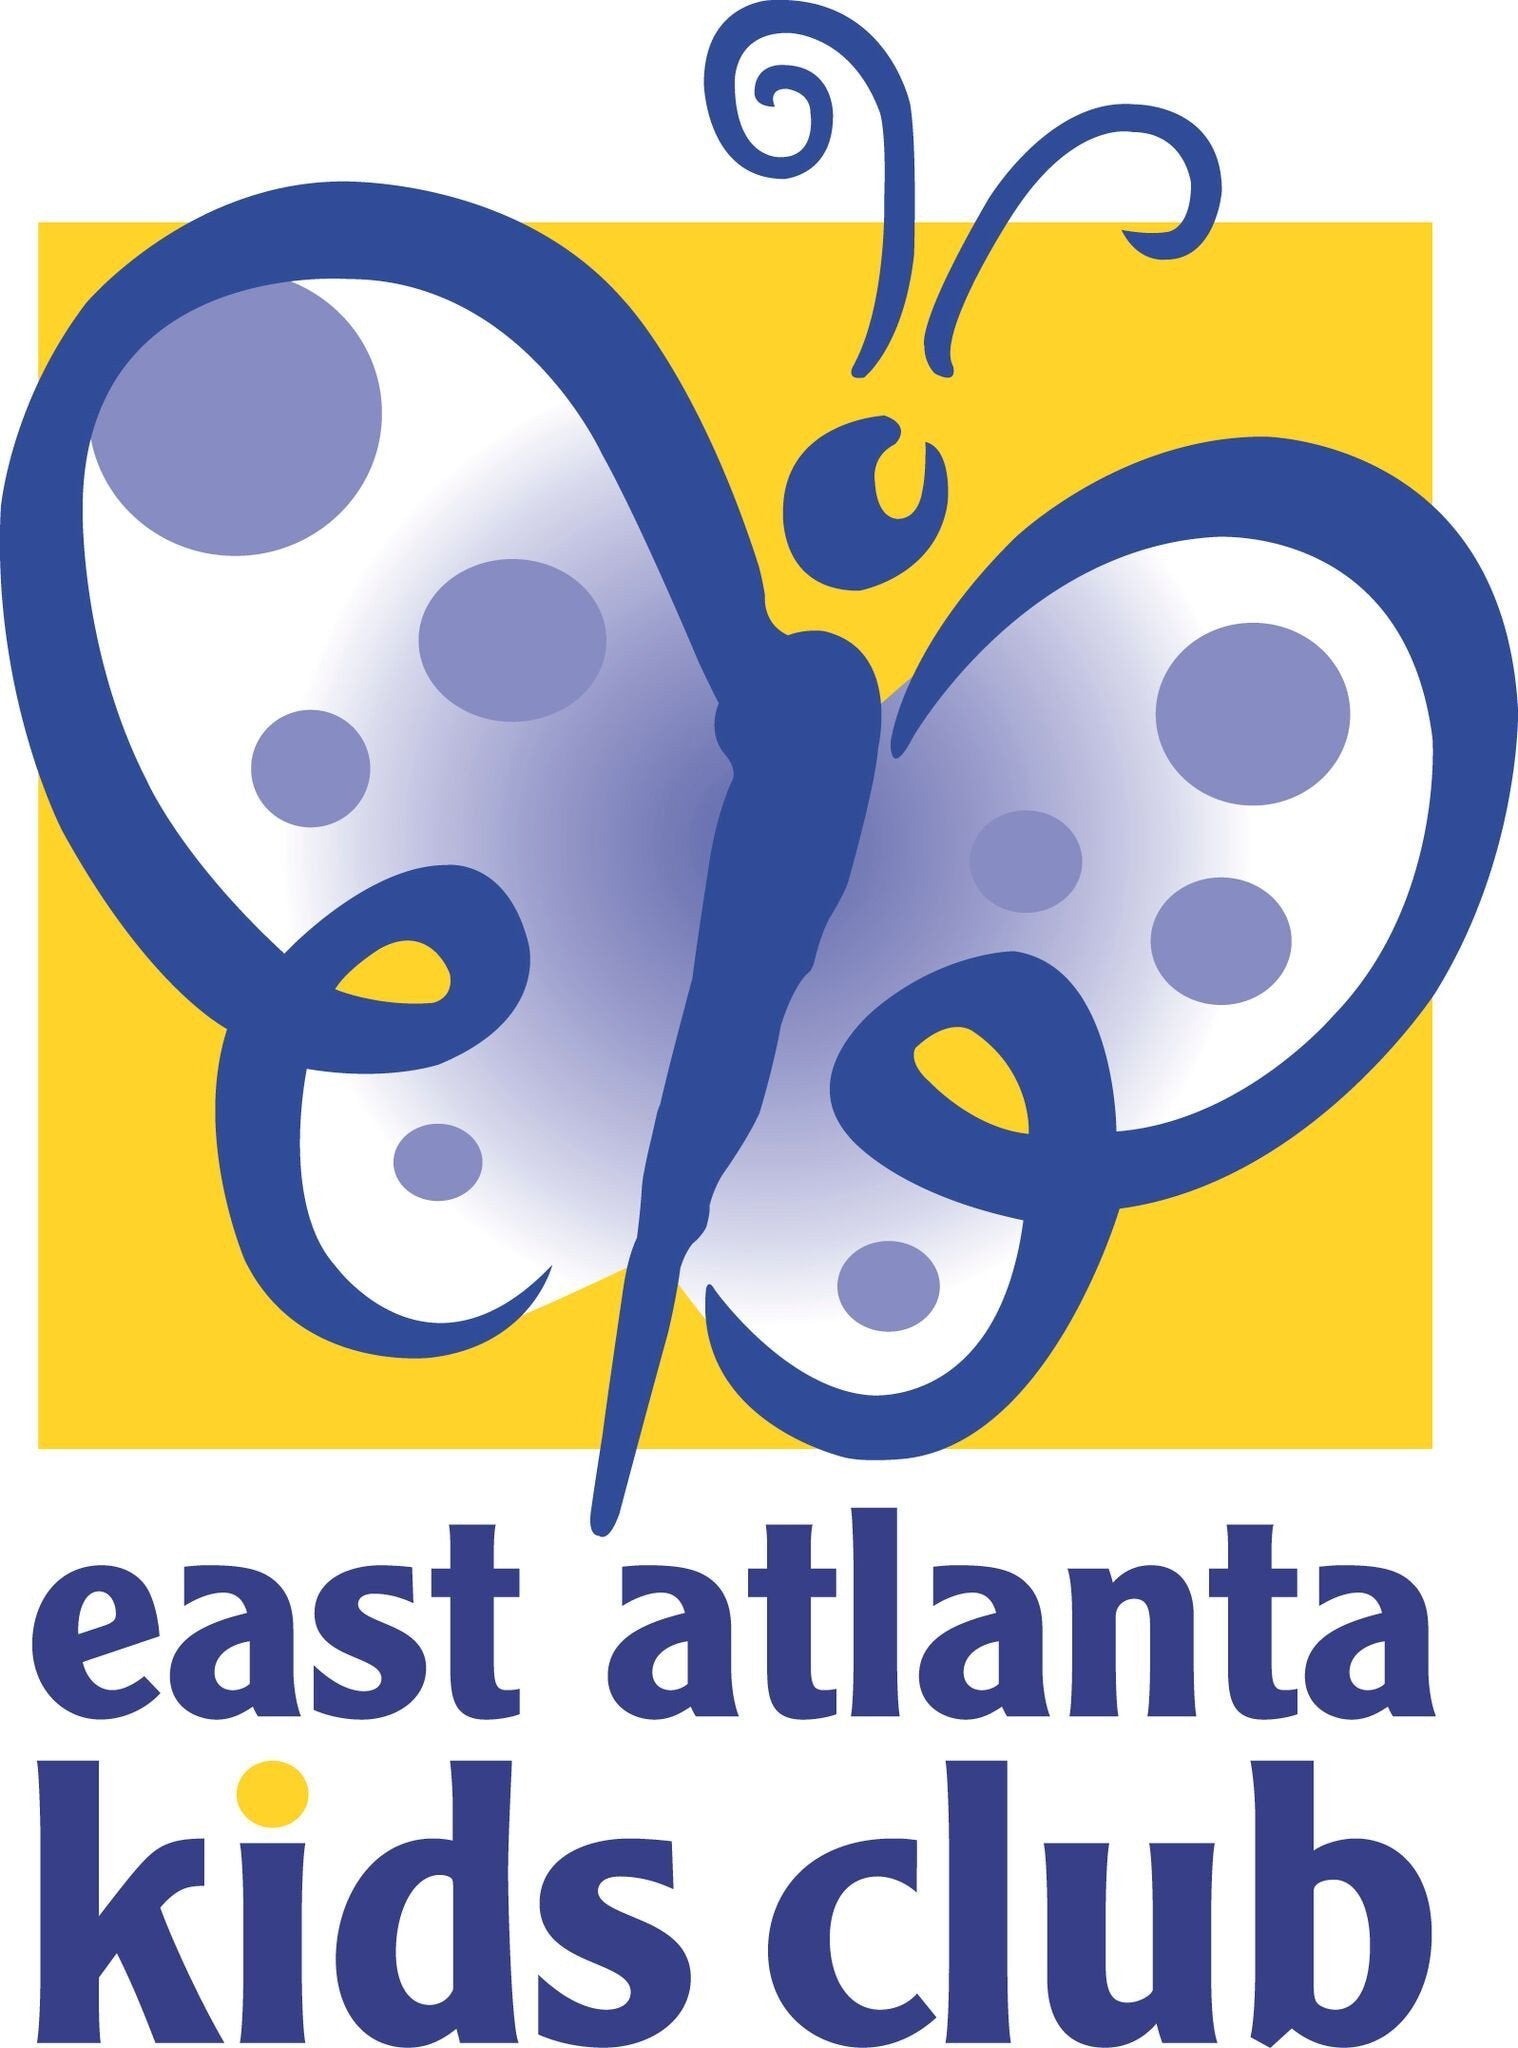 East Atlanta Kids Club Inc logo